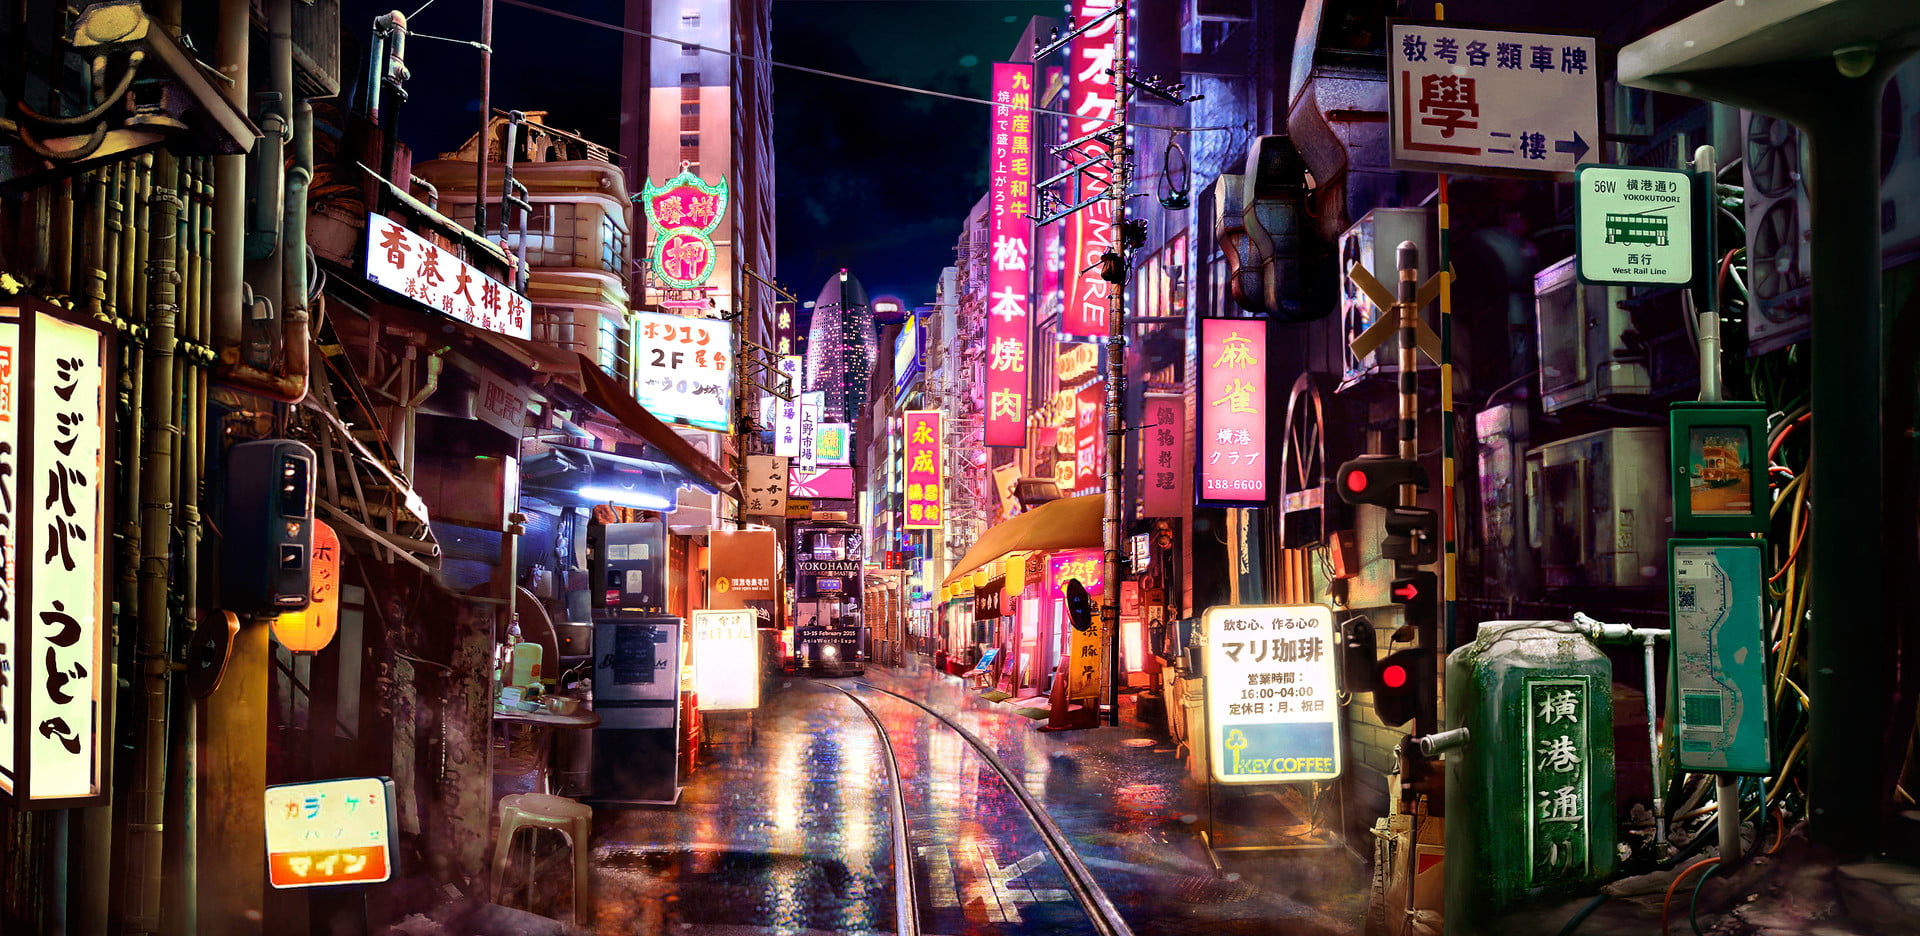 Japan, Asia, Asian, street, neon, neon lights, artwork, digital art